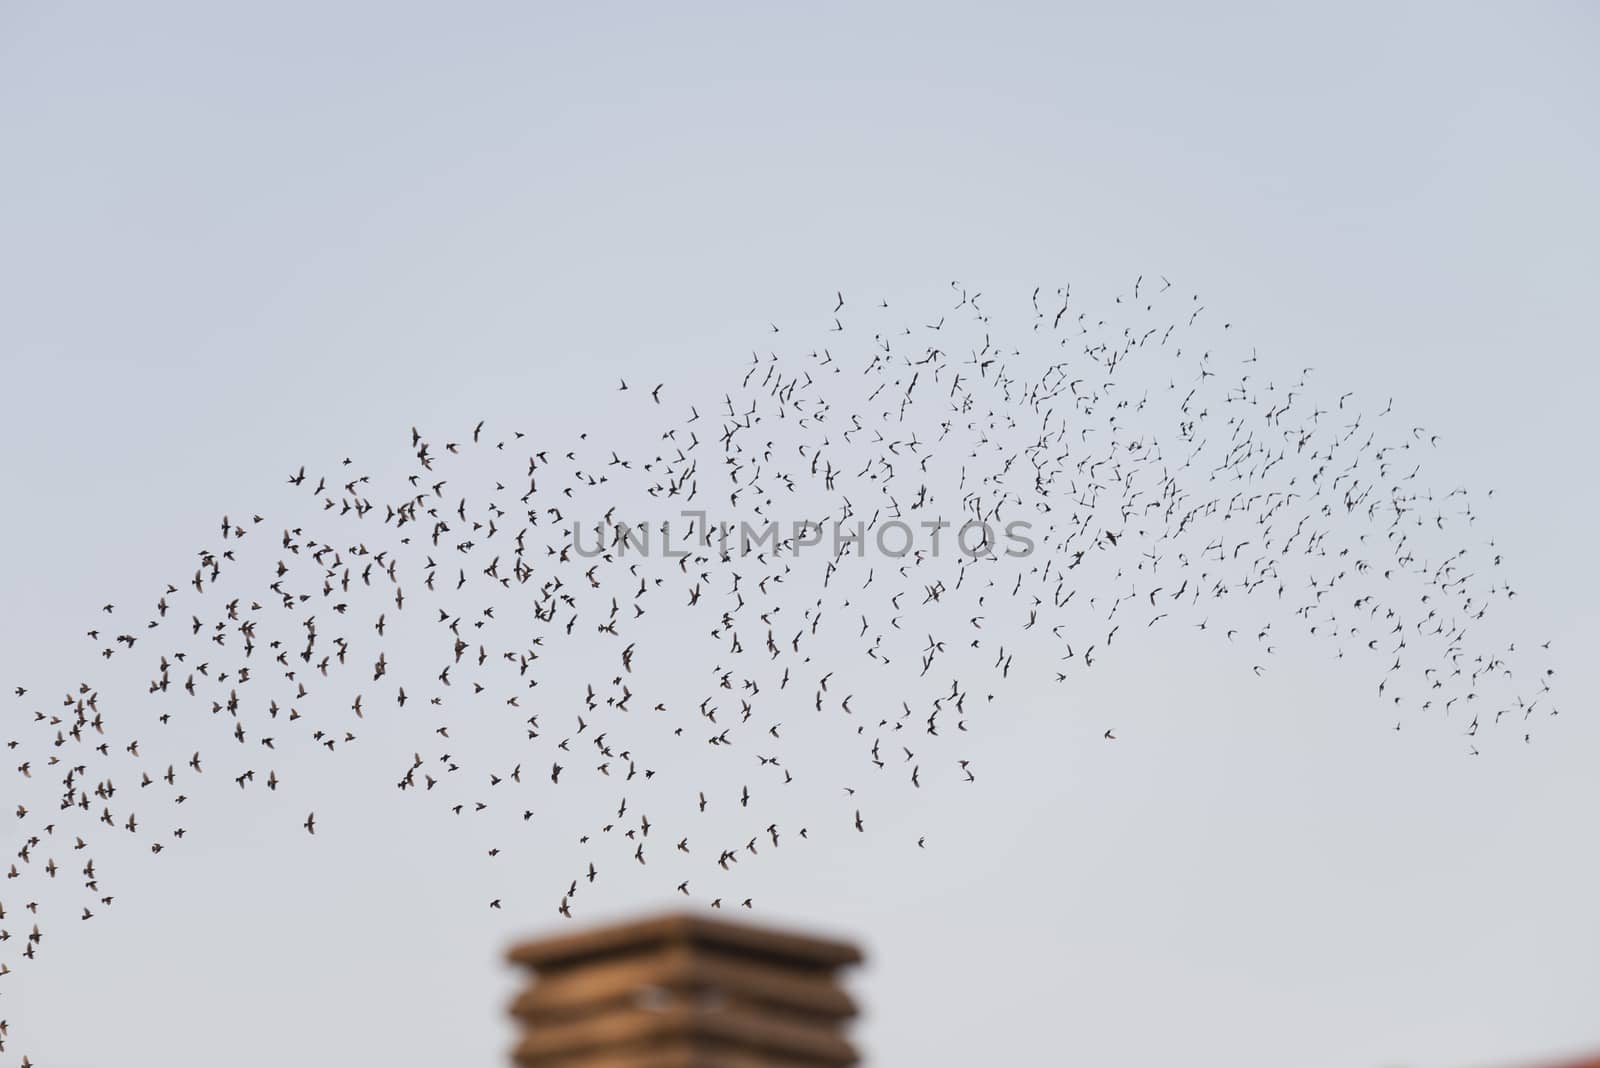 Birds flying in migration over a chimney by raferto1973